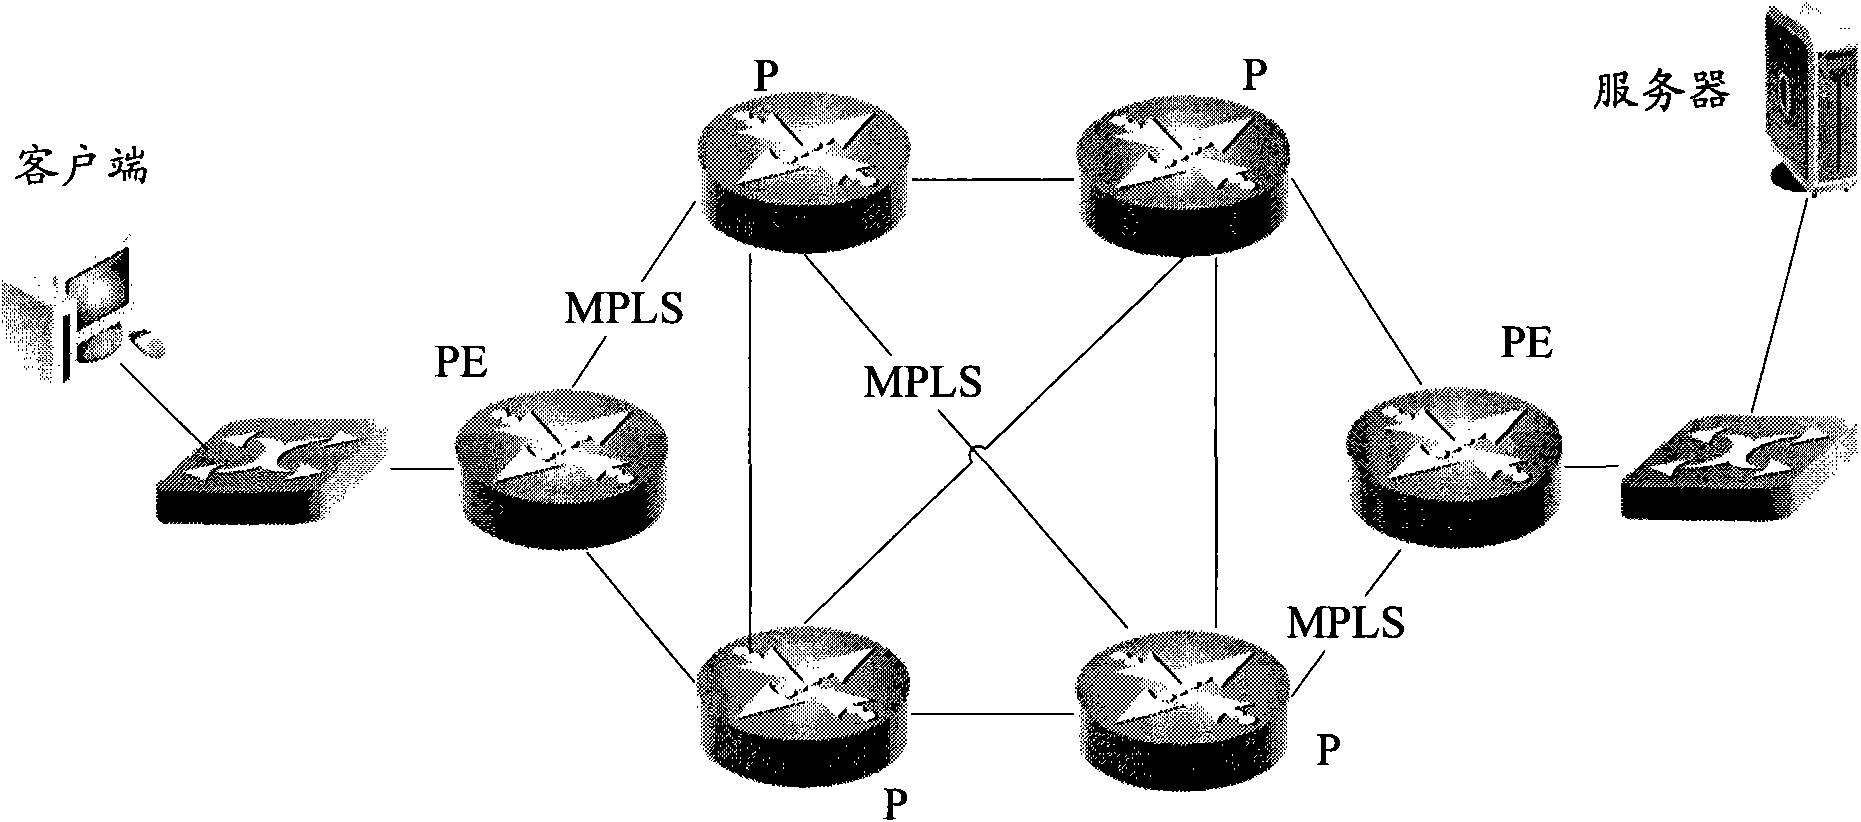 Negotiation method of maximum segmentation parameters and network forwarding equipment